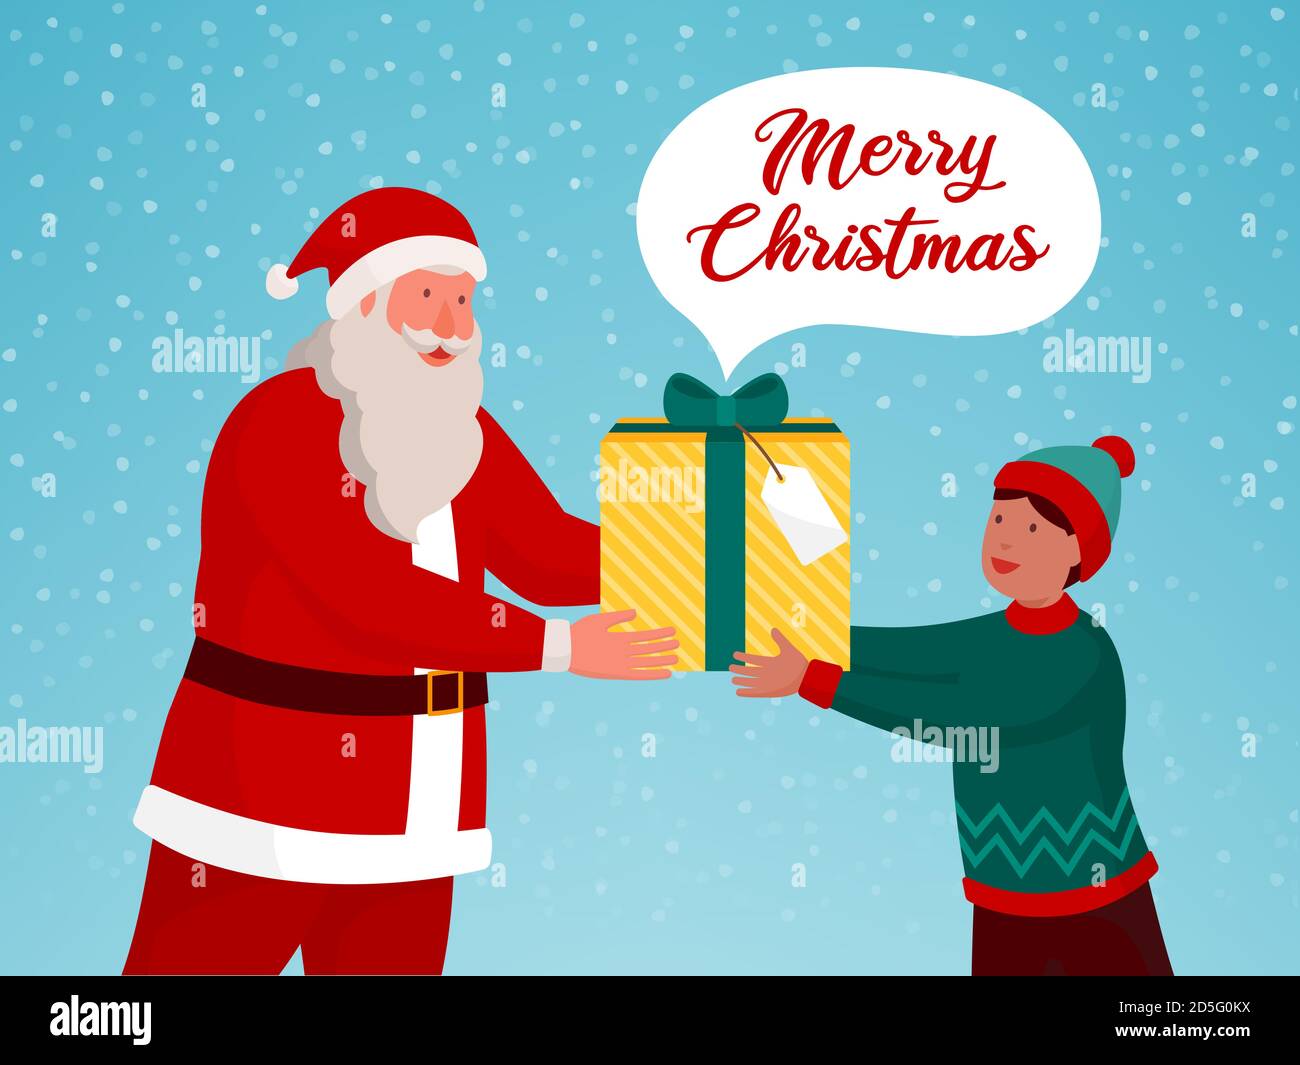 Santa Claus giving a Christmas gift to a boy and snow falling, Christmas card Stock Vector